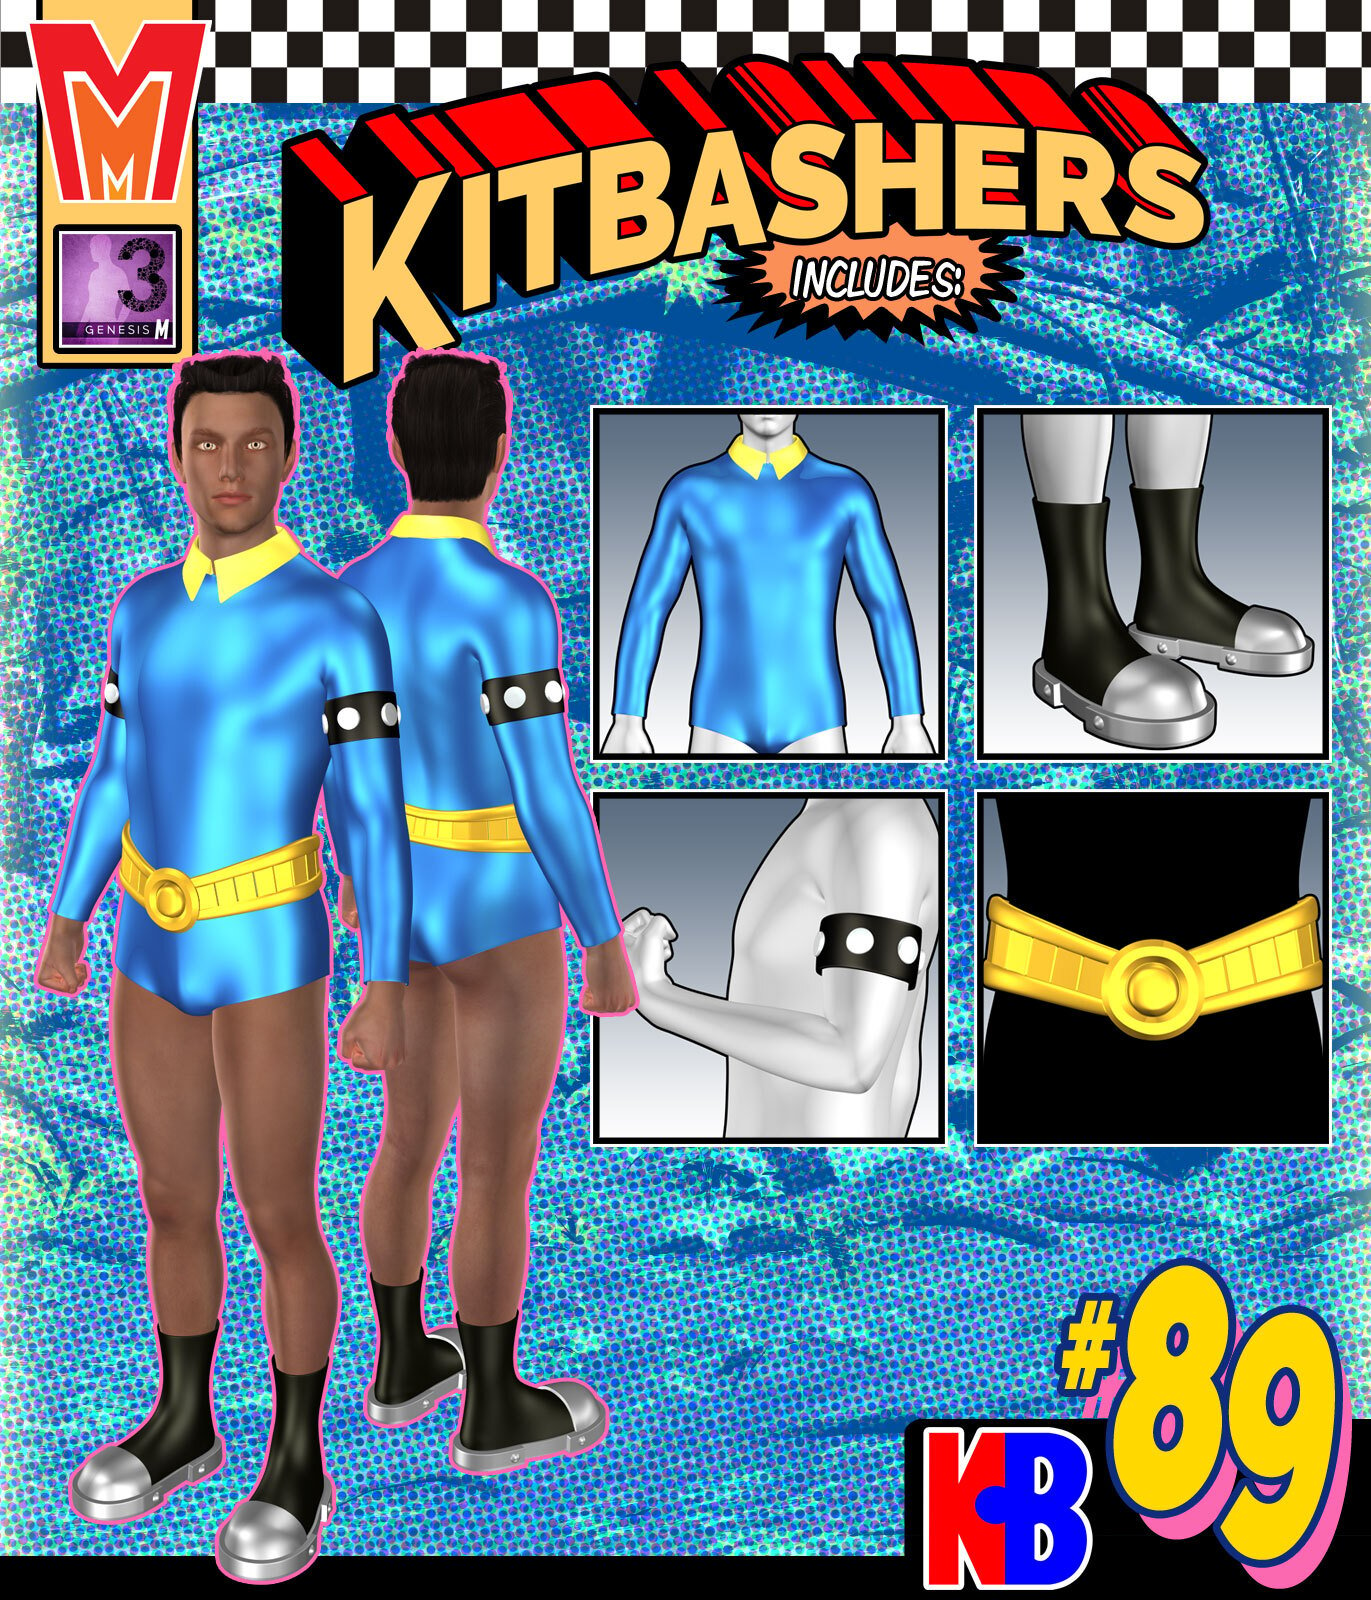 Kitbashers 089 MMG3M by: MightyMite, 3D Models by Daz 3D